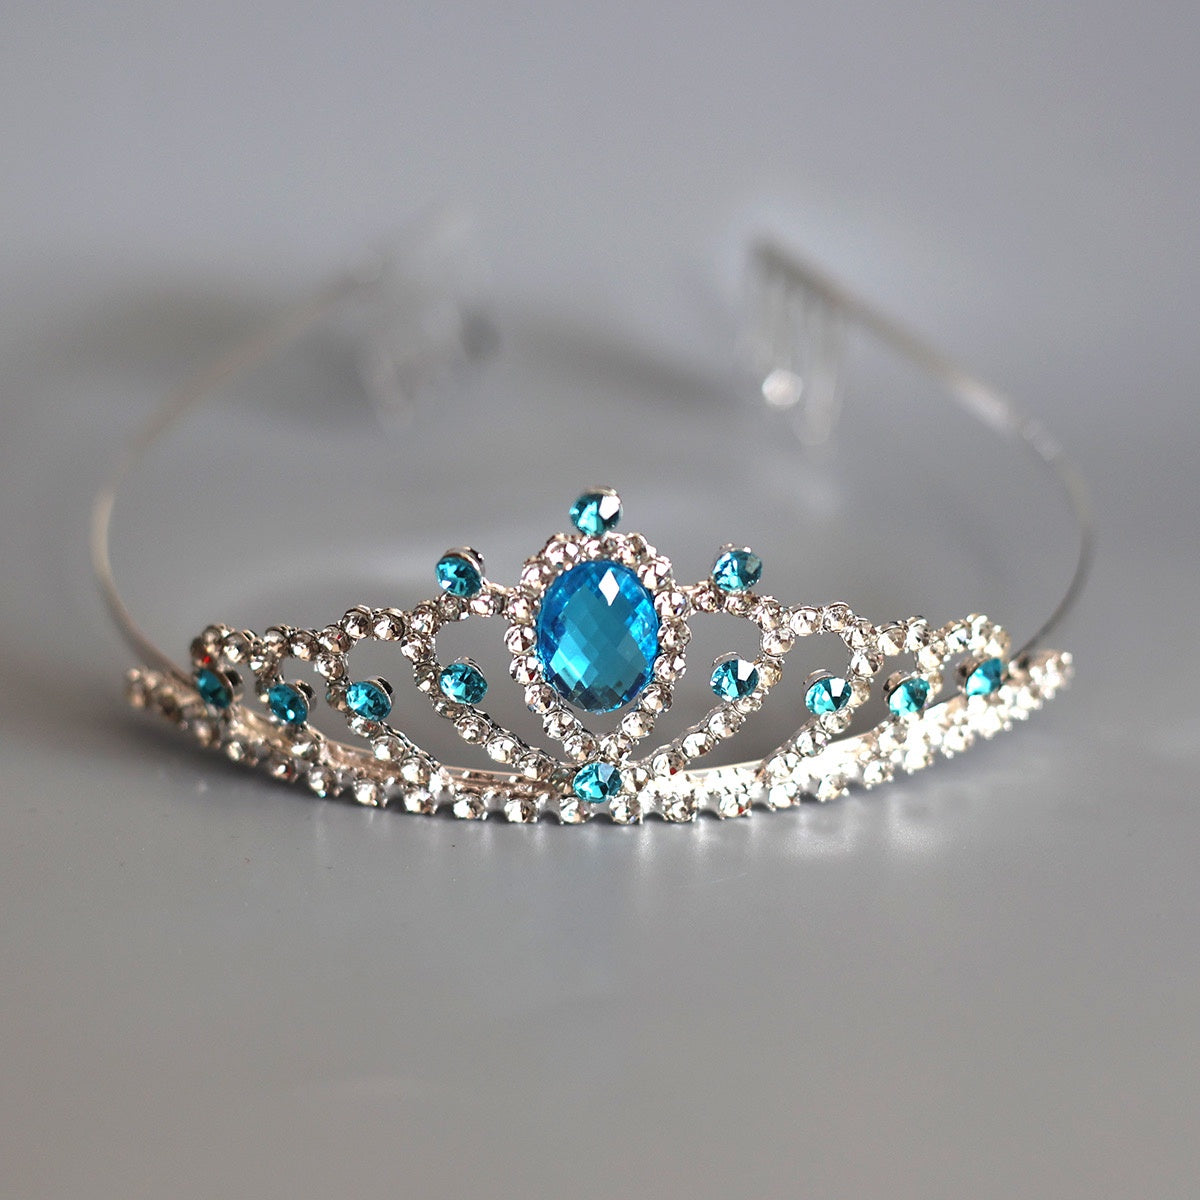 Dimante Tiara - Tiara Silver With Blue Diamante